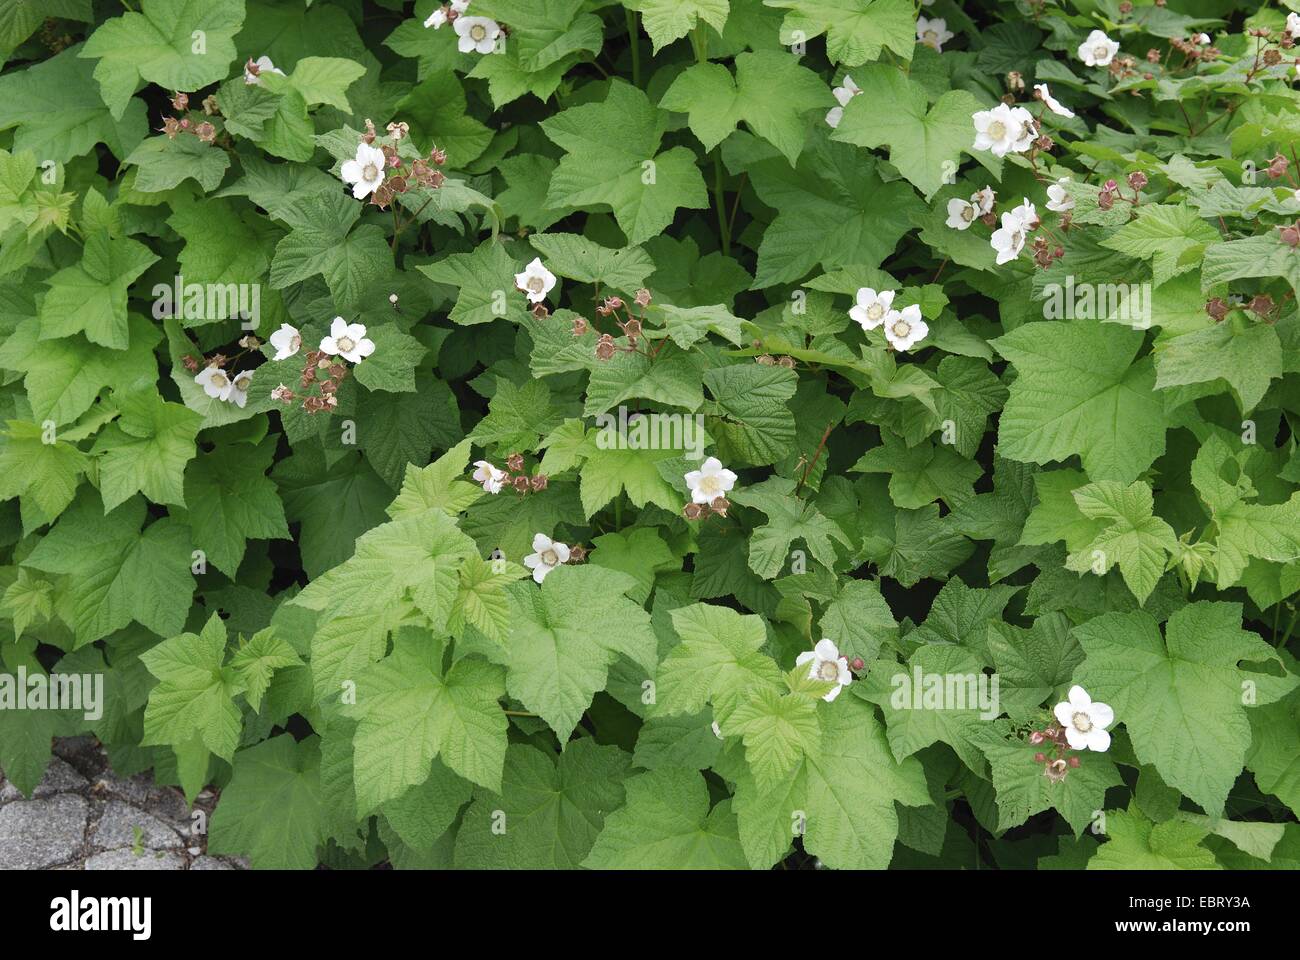 thimbleberry, western thimble-berry (Rubus parviflorus), blooming Stock Photo